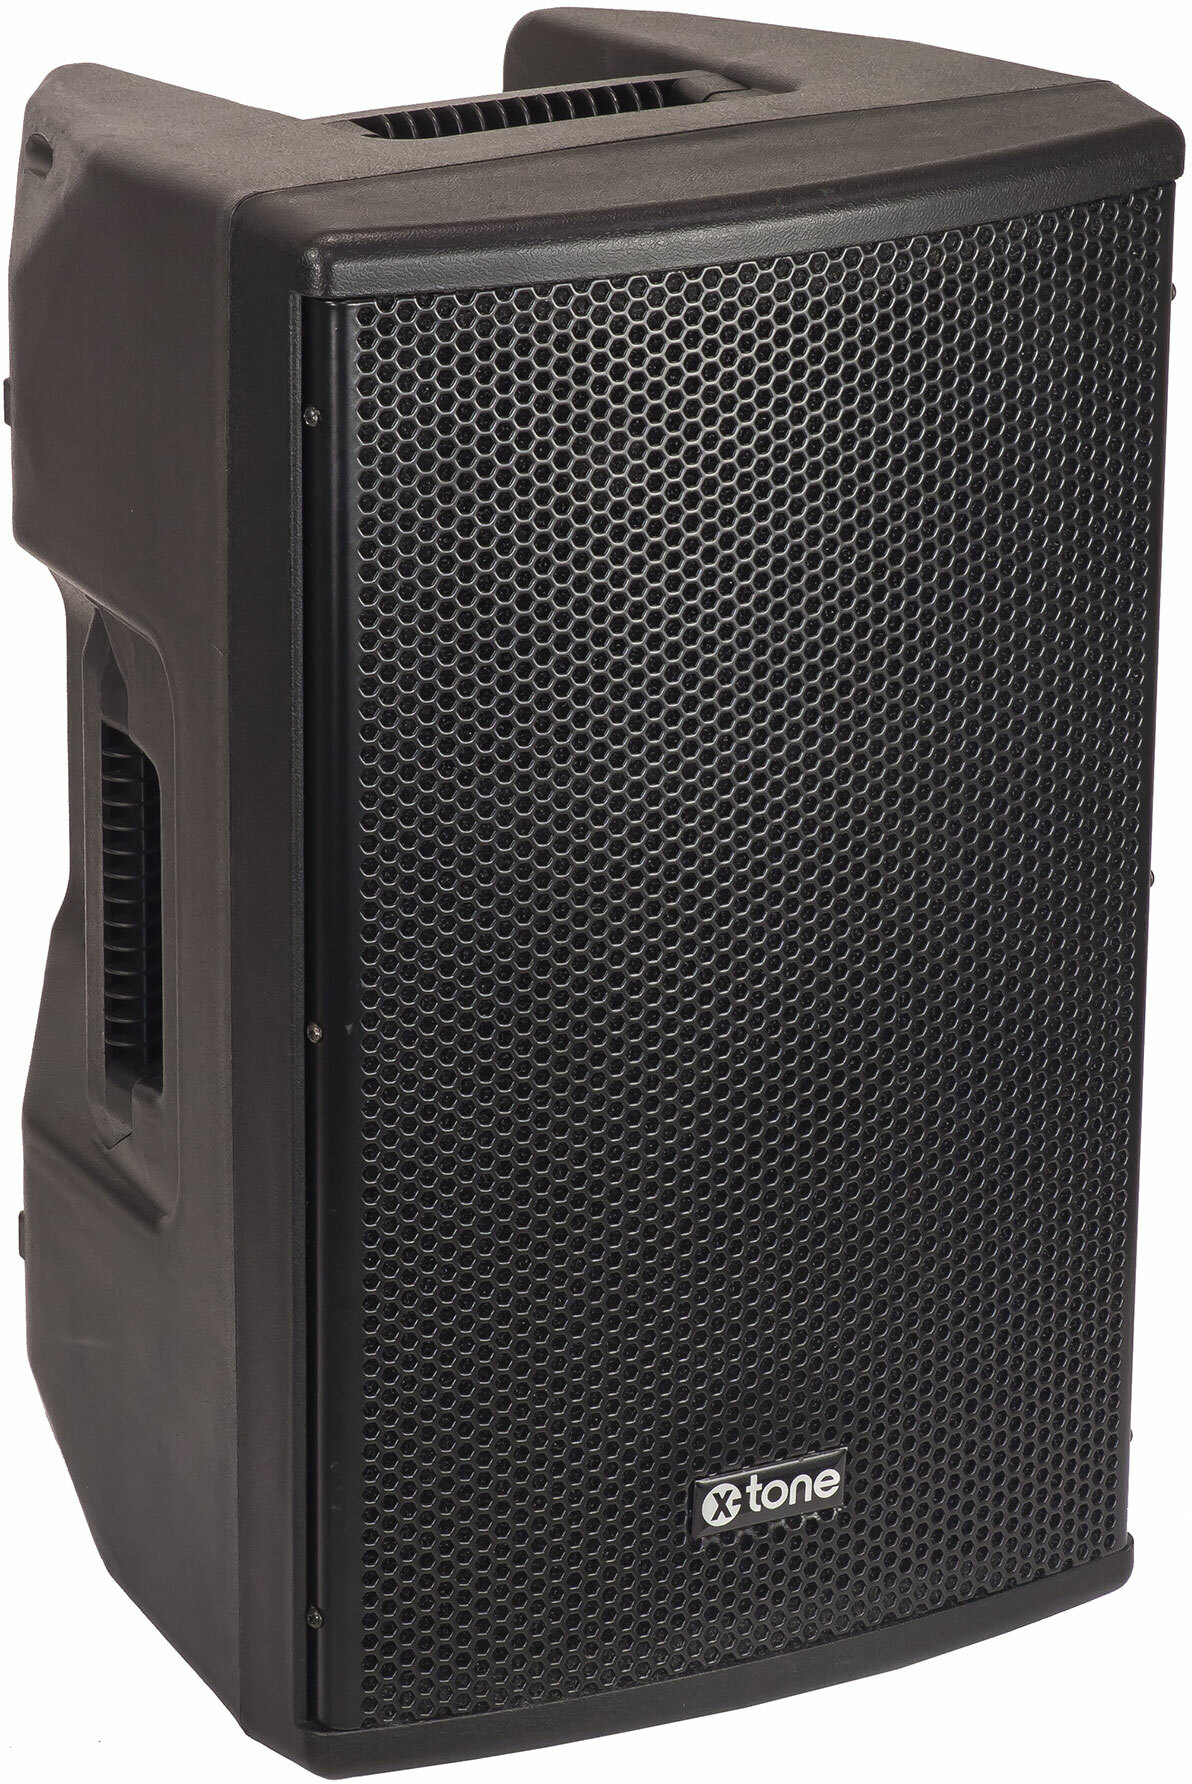 X-tone Xts-10 - Active full-range speaker - Main picture